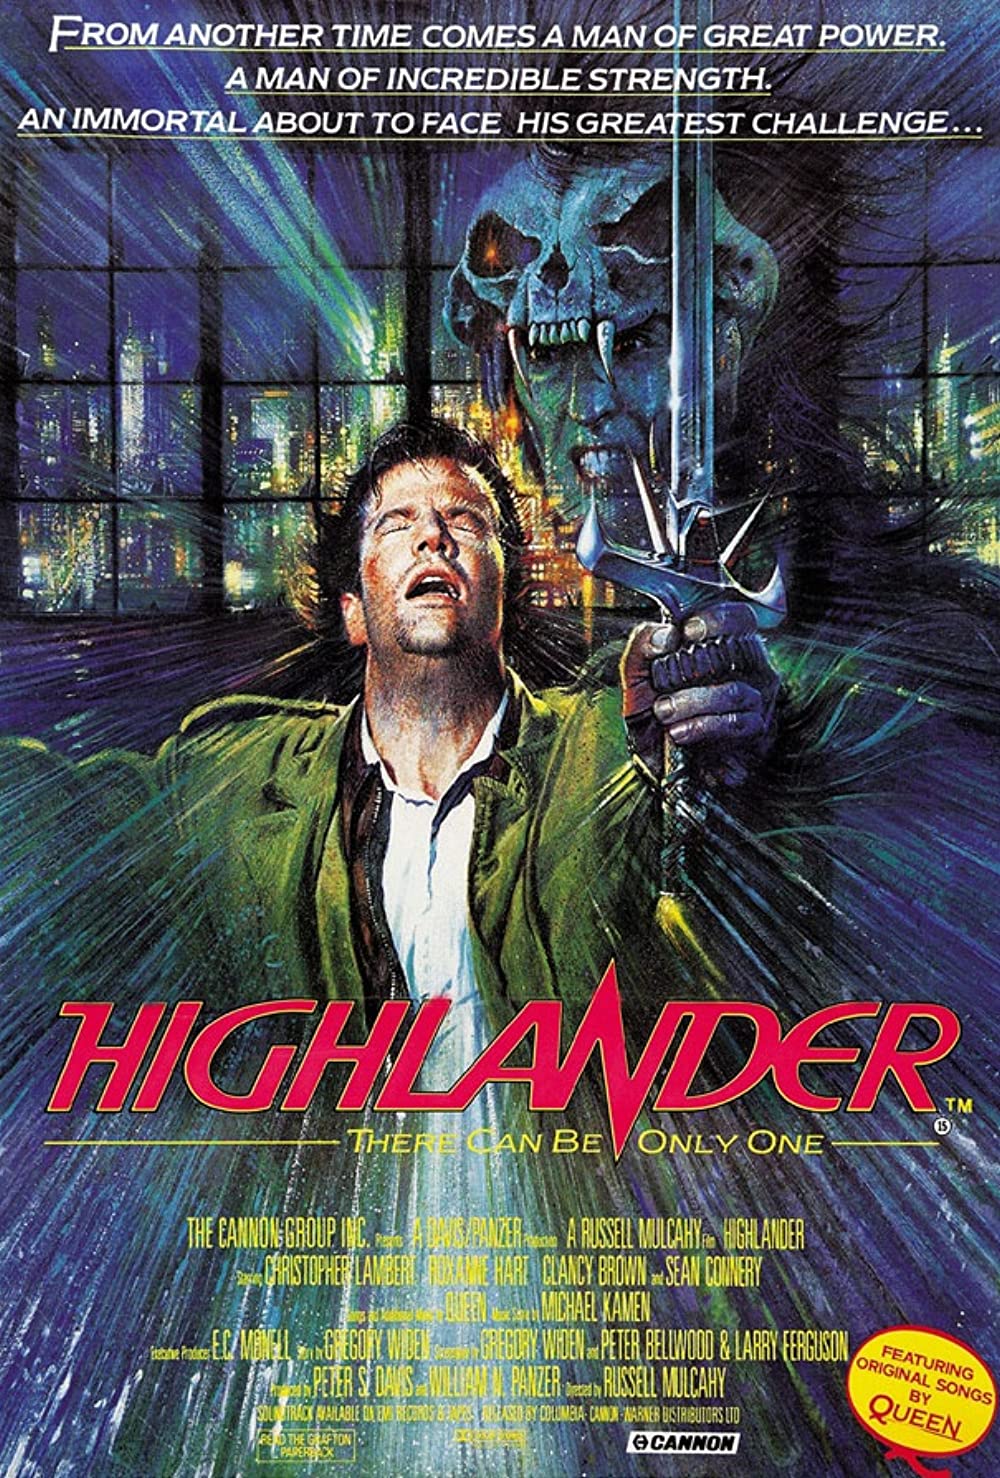 Stiahni si Filmy CZ/SK dabing Highlander (1986)(Remastered)(Hevc)(1080p)(BluRay)(English-CZ) = CSFD 76%